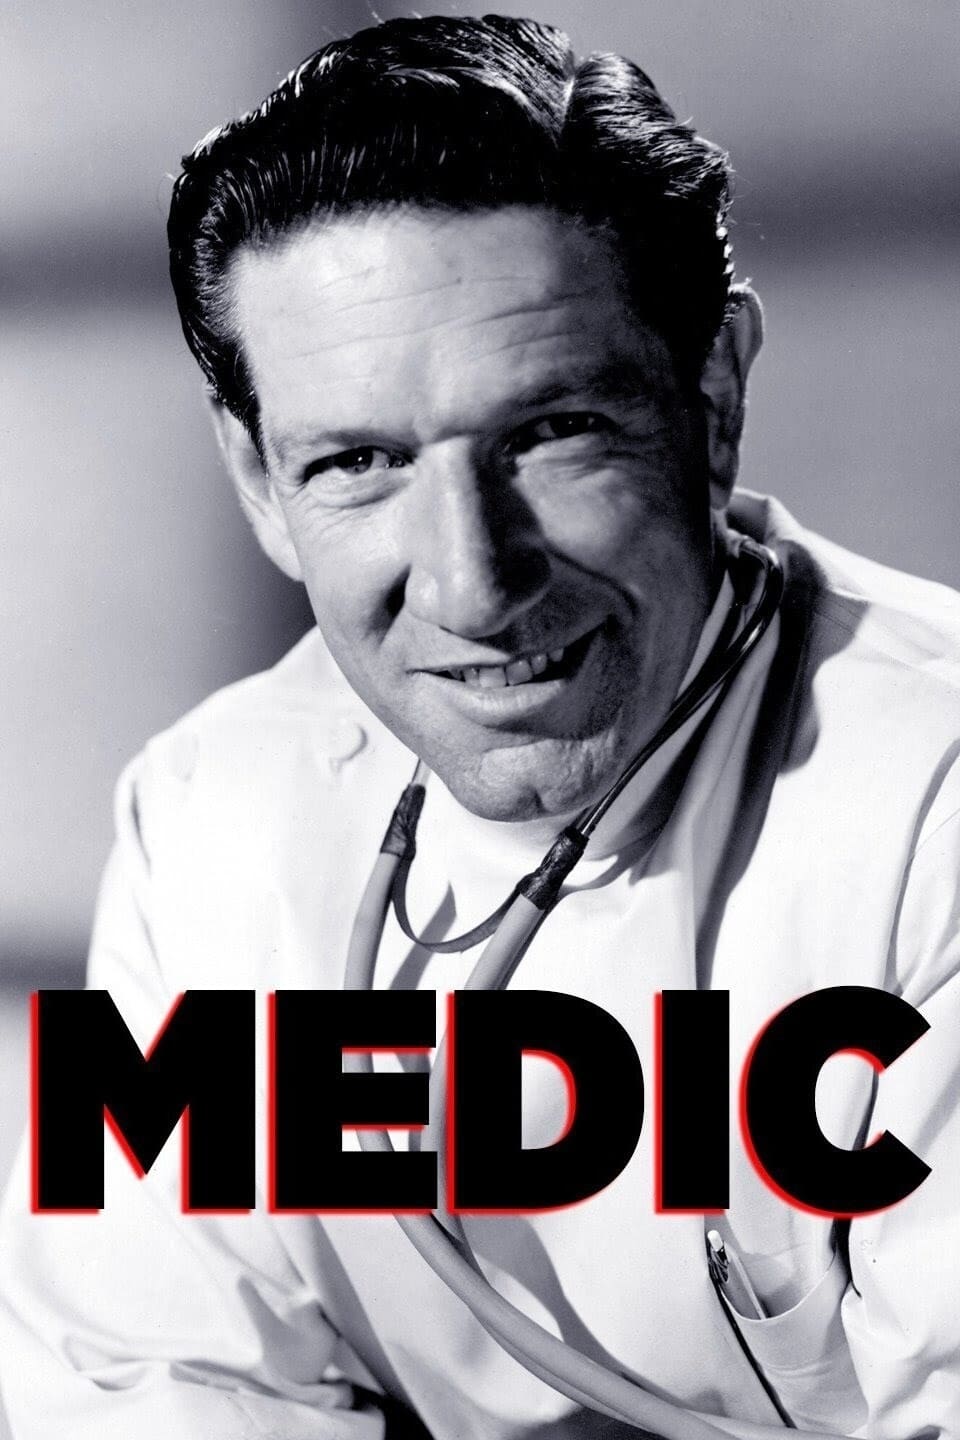 Medic (1954)